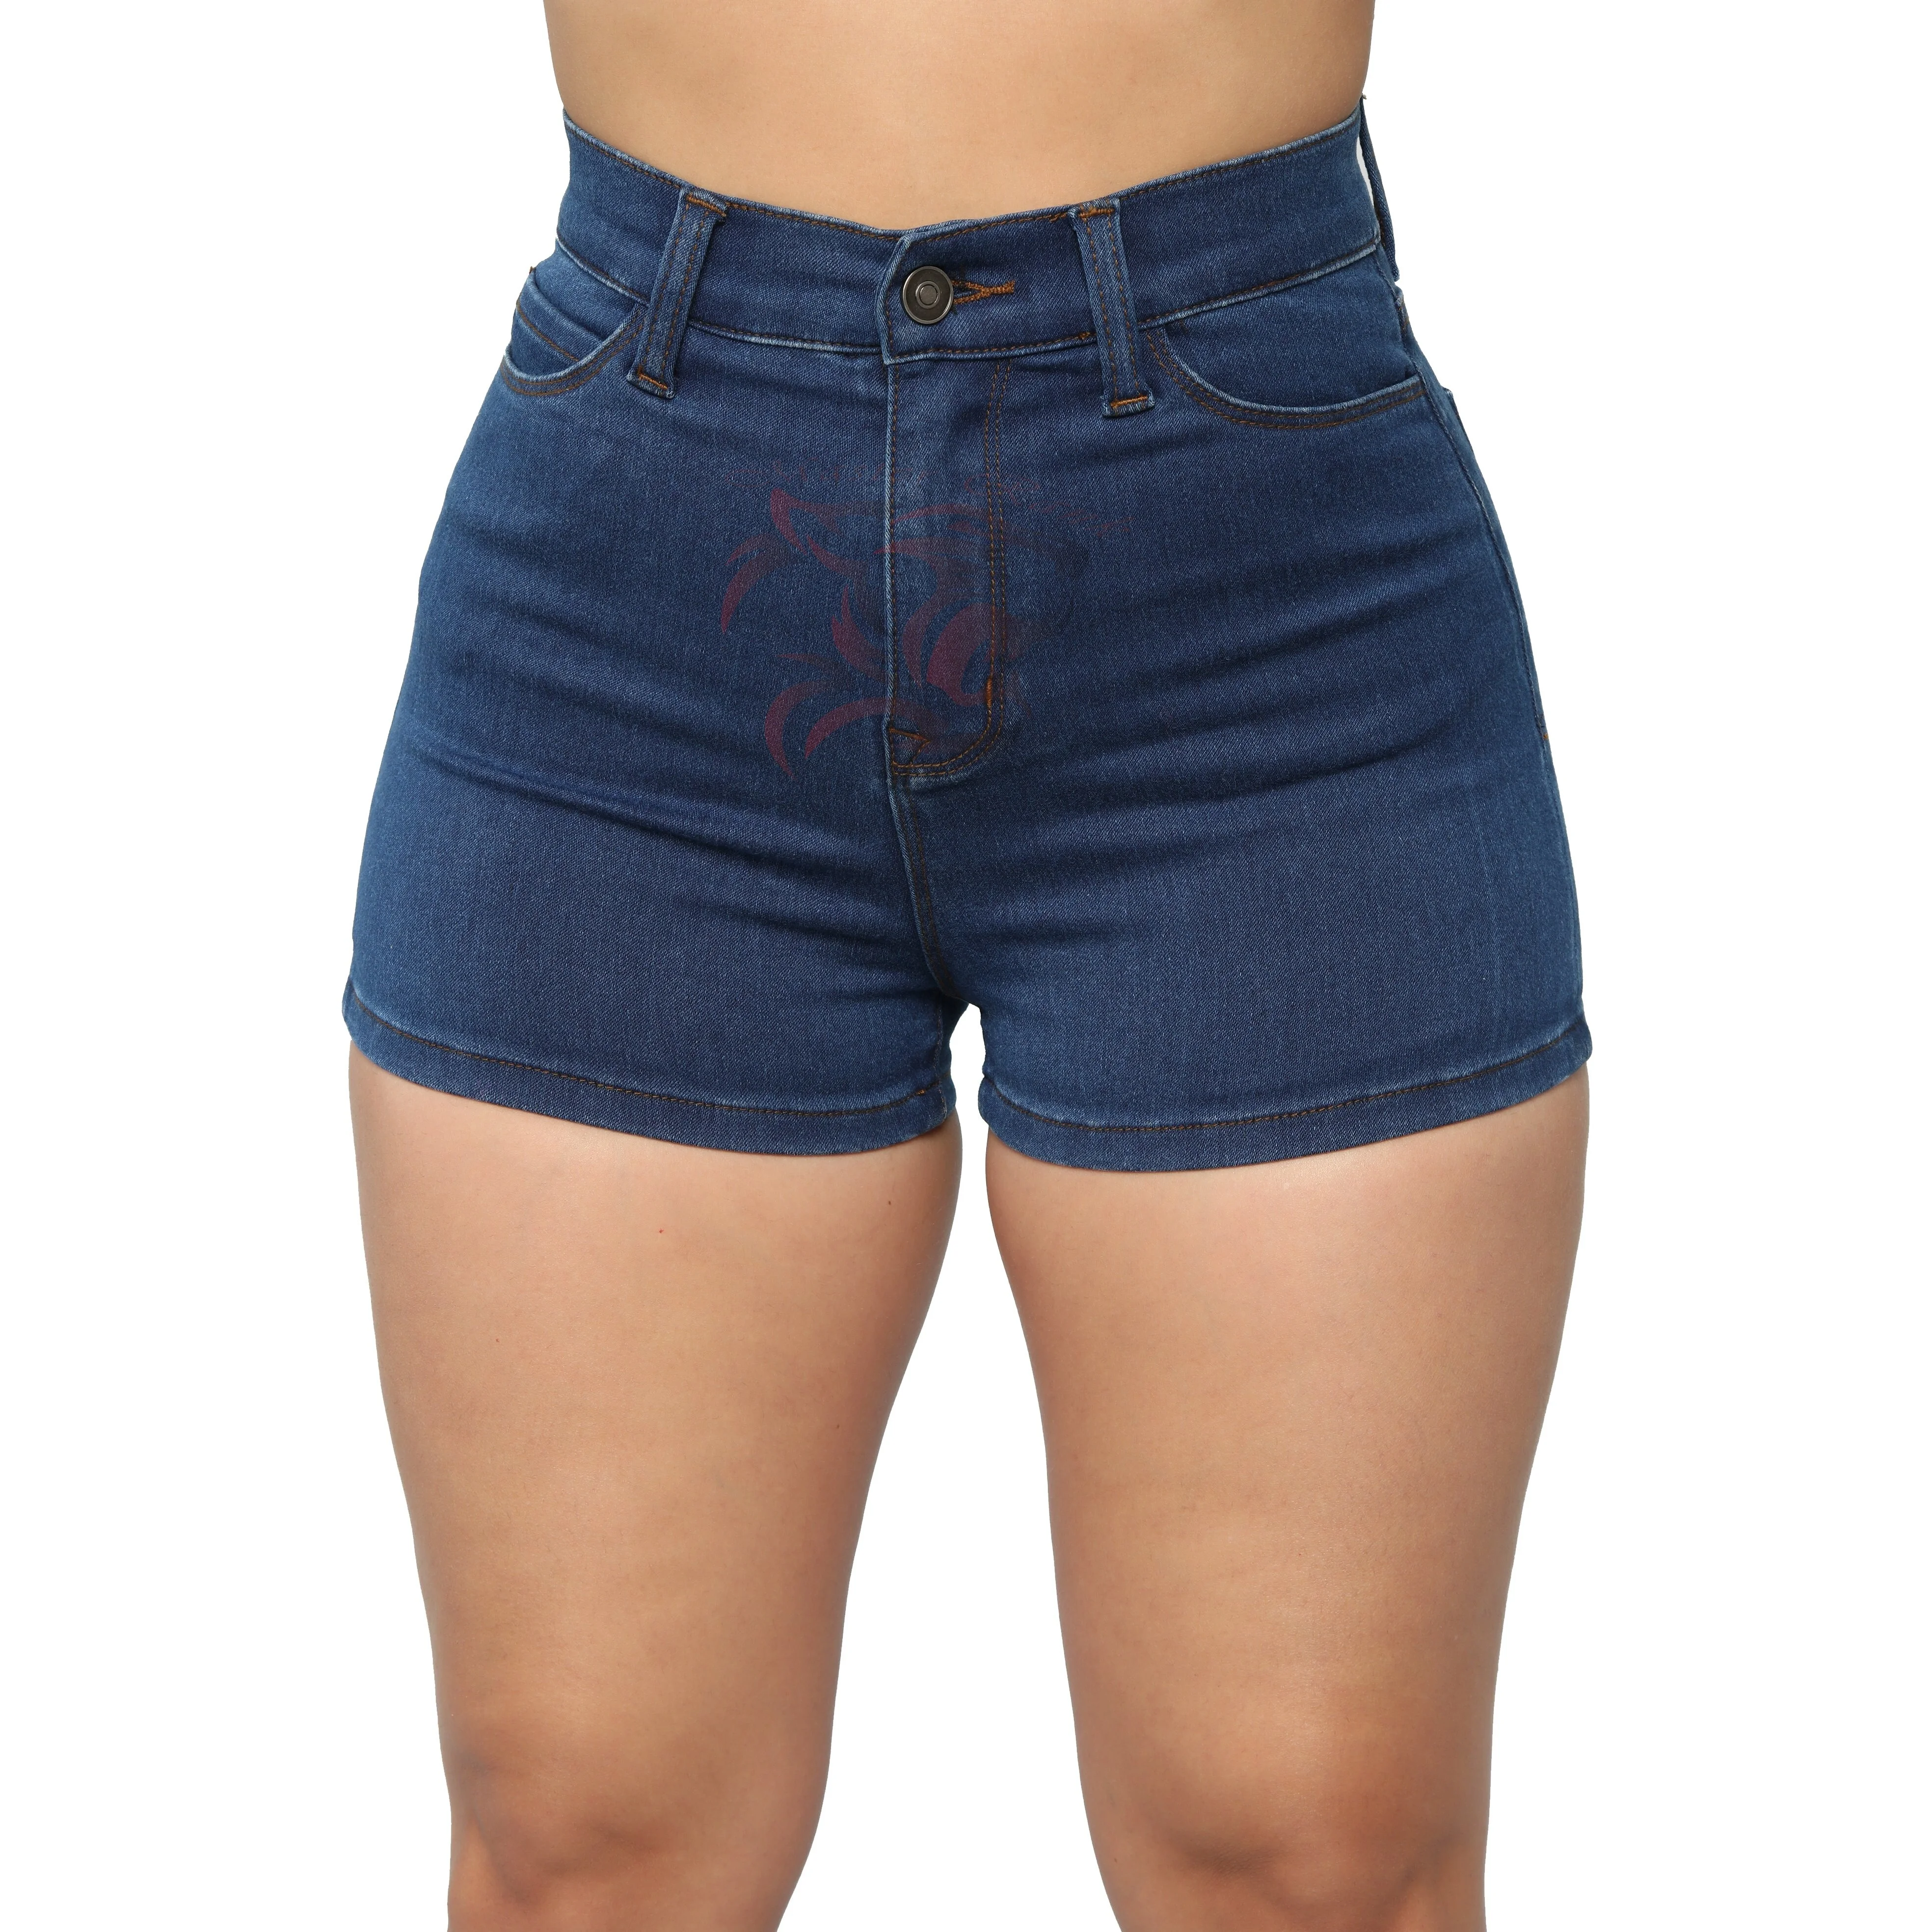 Pantalones Cortos Vaqueros Para Mujer,Vaqueros Con Bordados Florales, 2019 - Buy 2019 Ladies Denim For Girls,Women Jeans Short Booty Pants,Women Jeans Shorts Product on